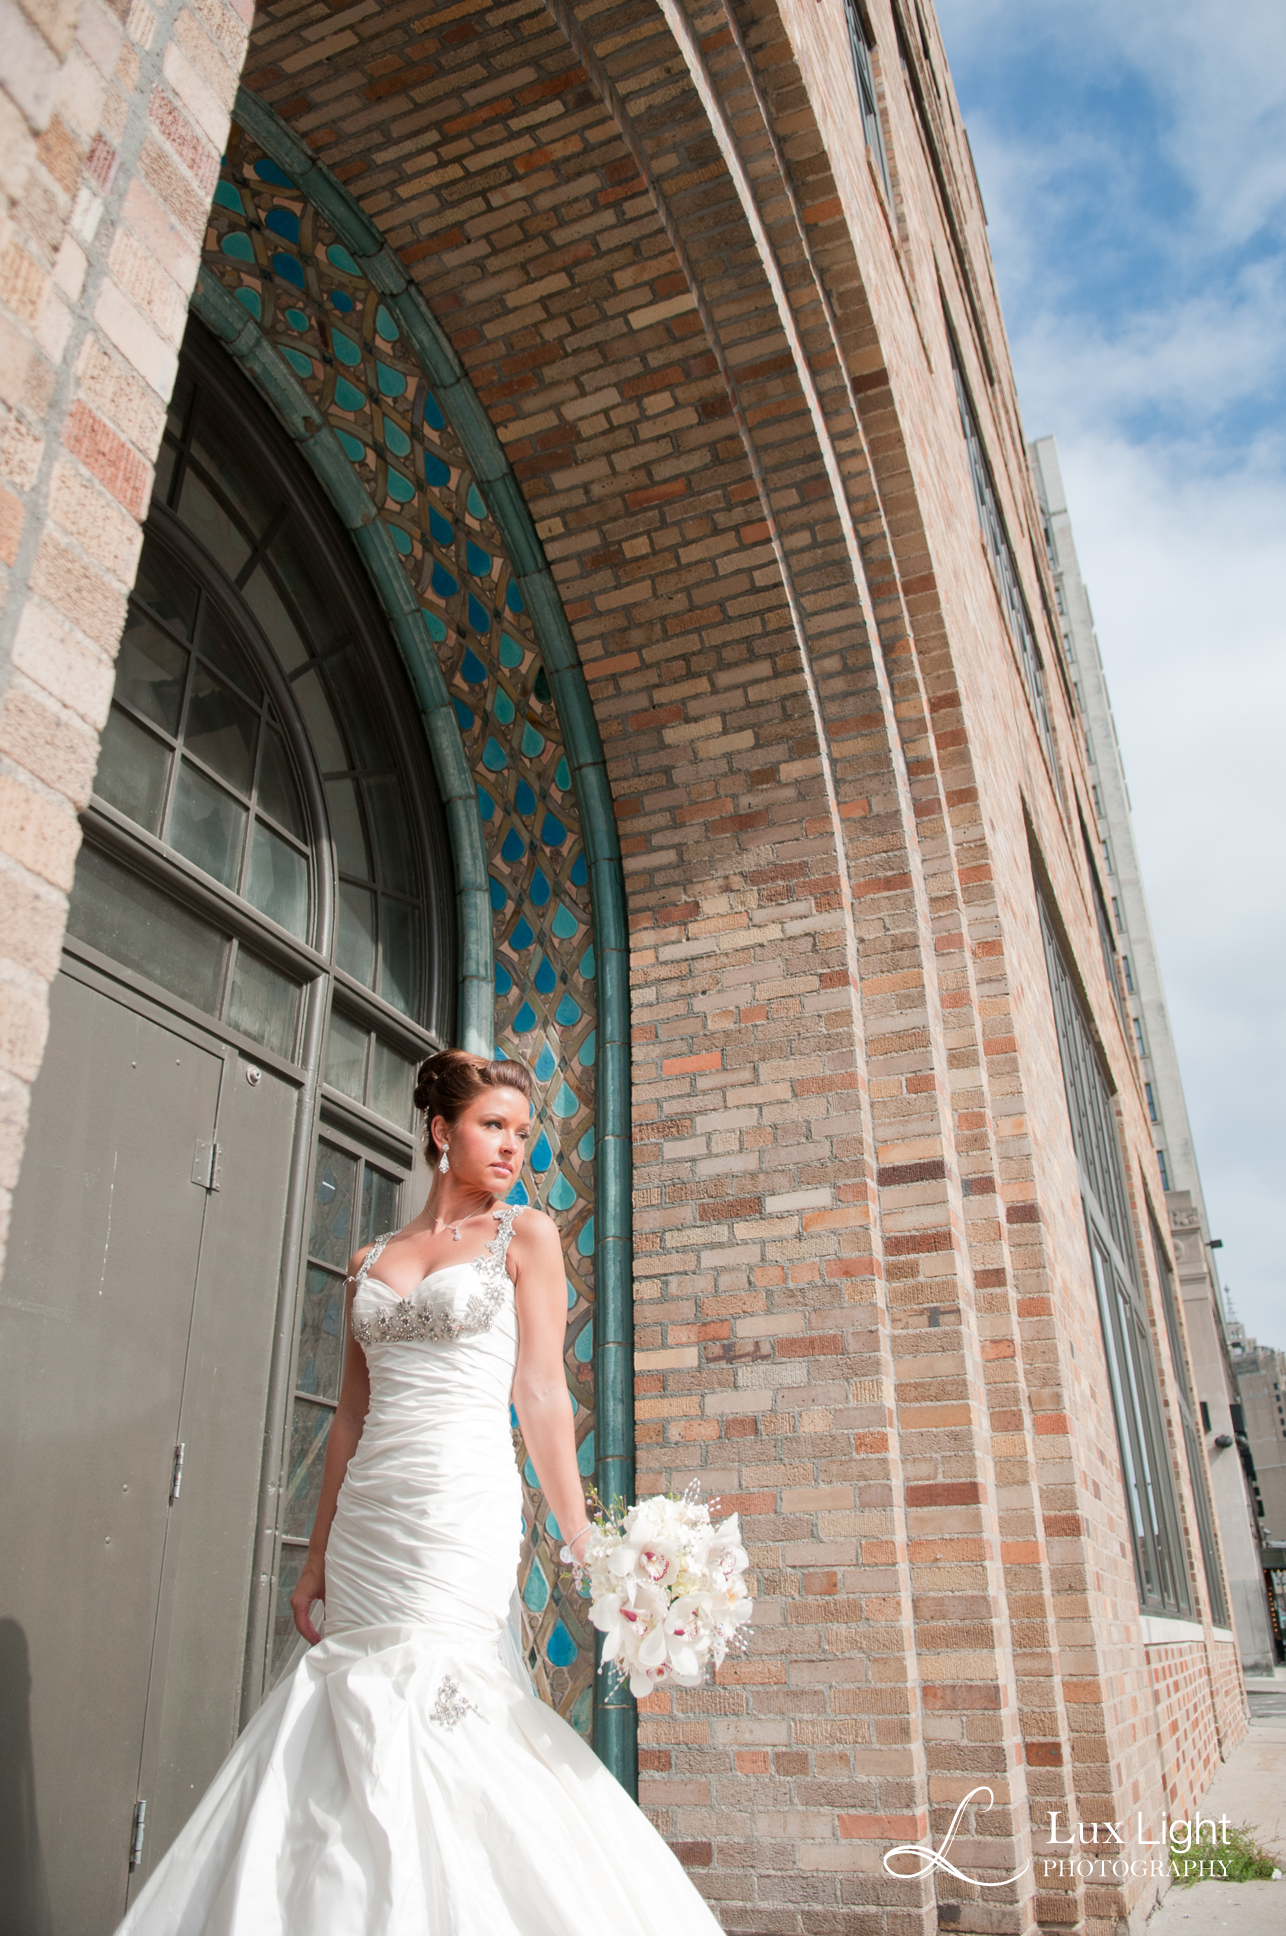 Traverse City Wedding Photographer-Lux Light Photography